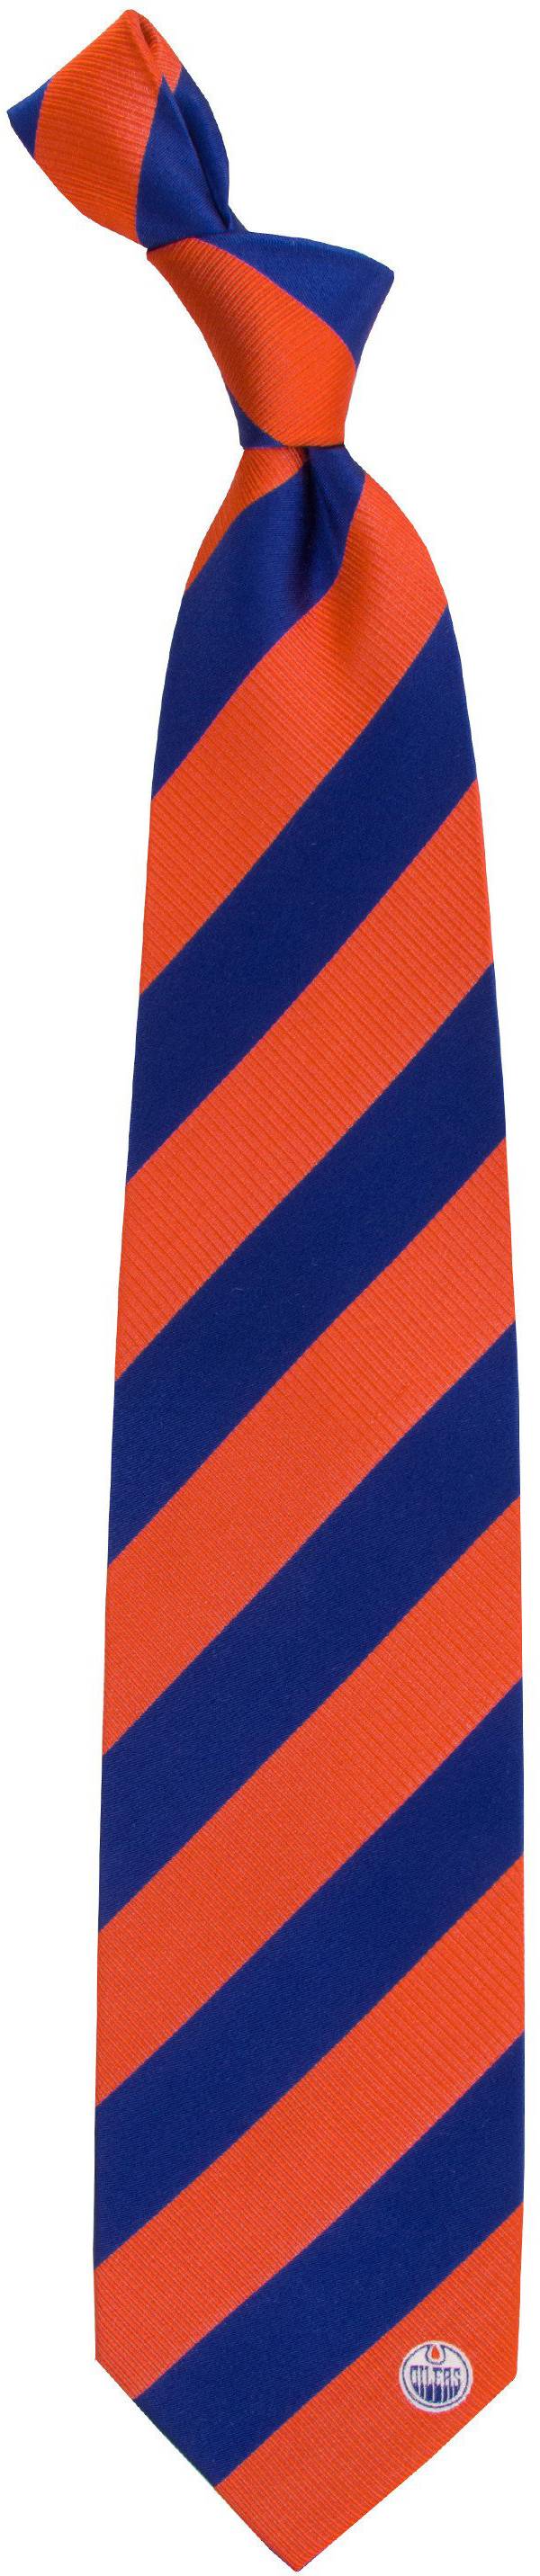 Eagles Wings Edmonton Oilers Woven Silk Necktie product image